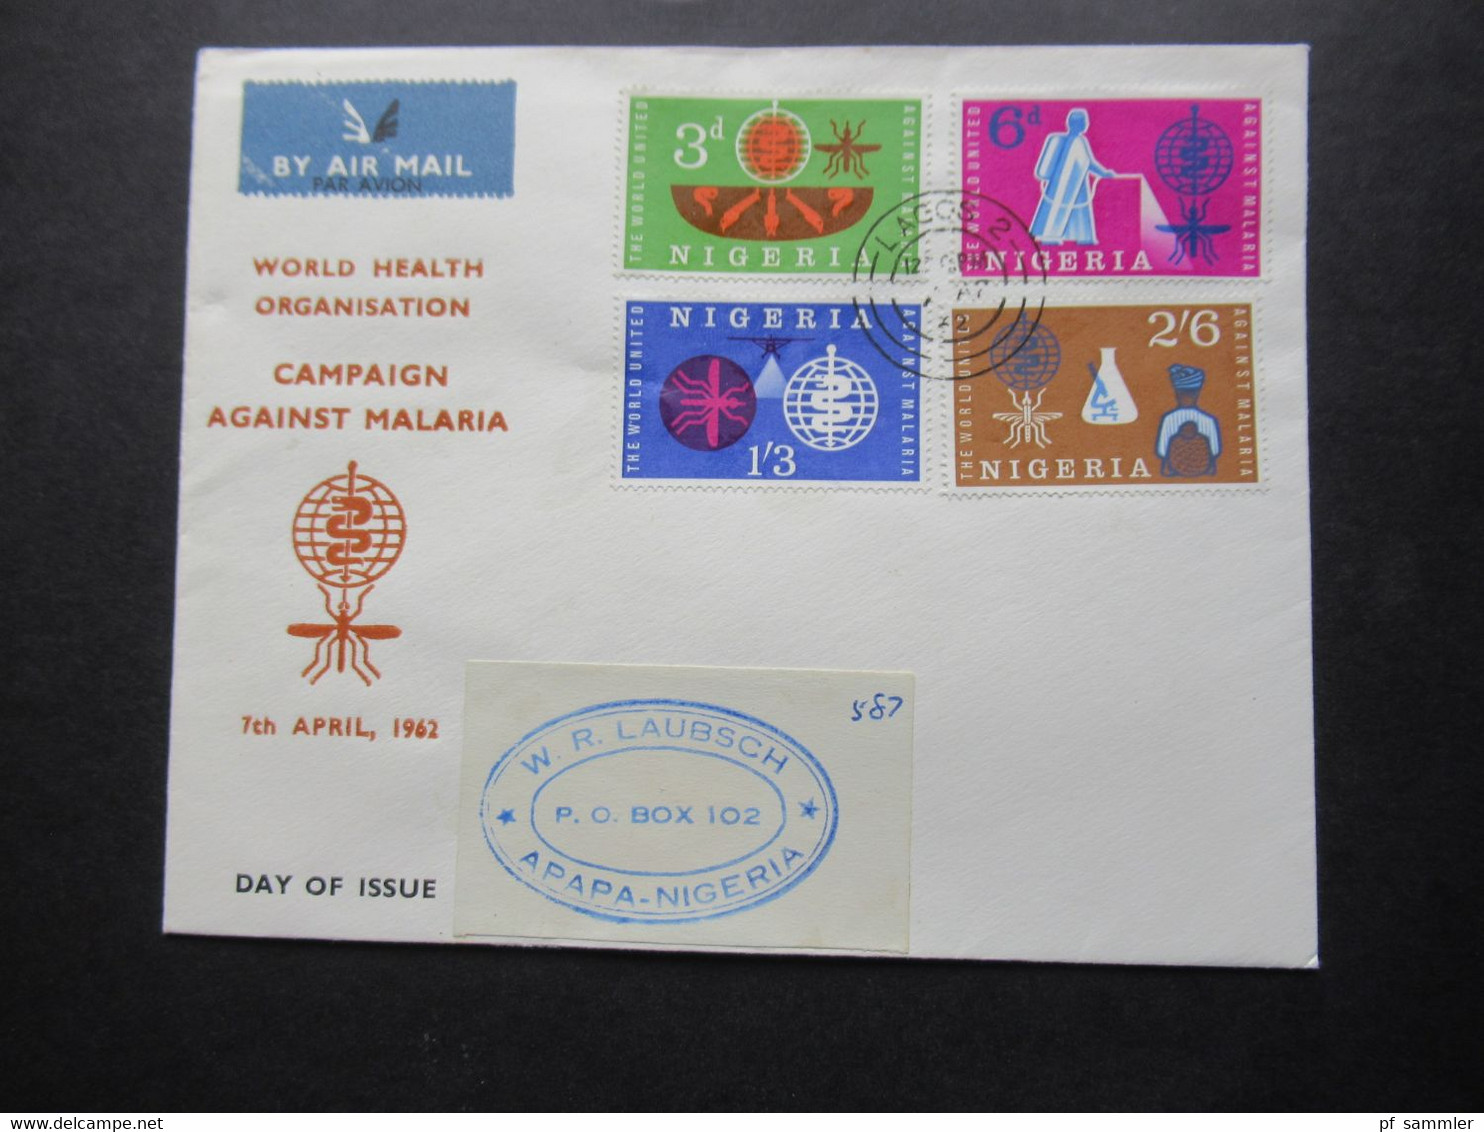 Nigeria FDC 1962 World Health Organisation Campaign Against Malaria By Air Mail Nach Apapa Nigeria Stempel Lagos 1 - Nigeria (1961-...)